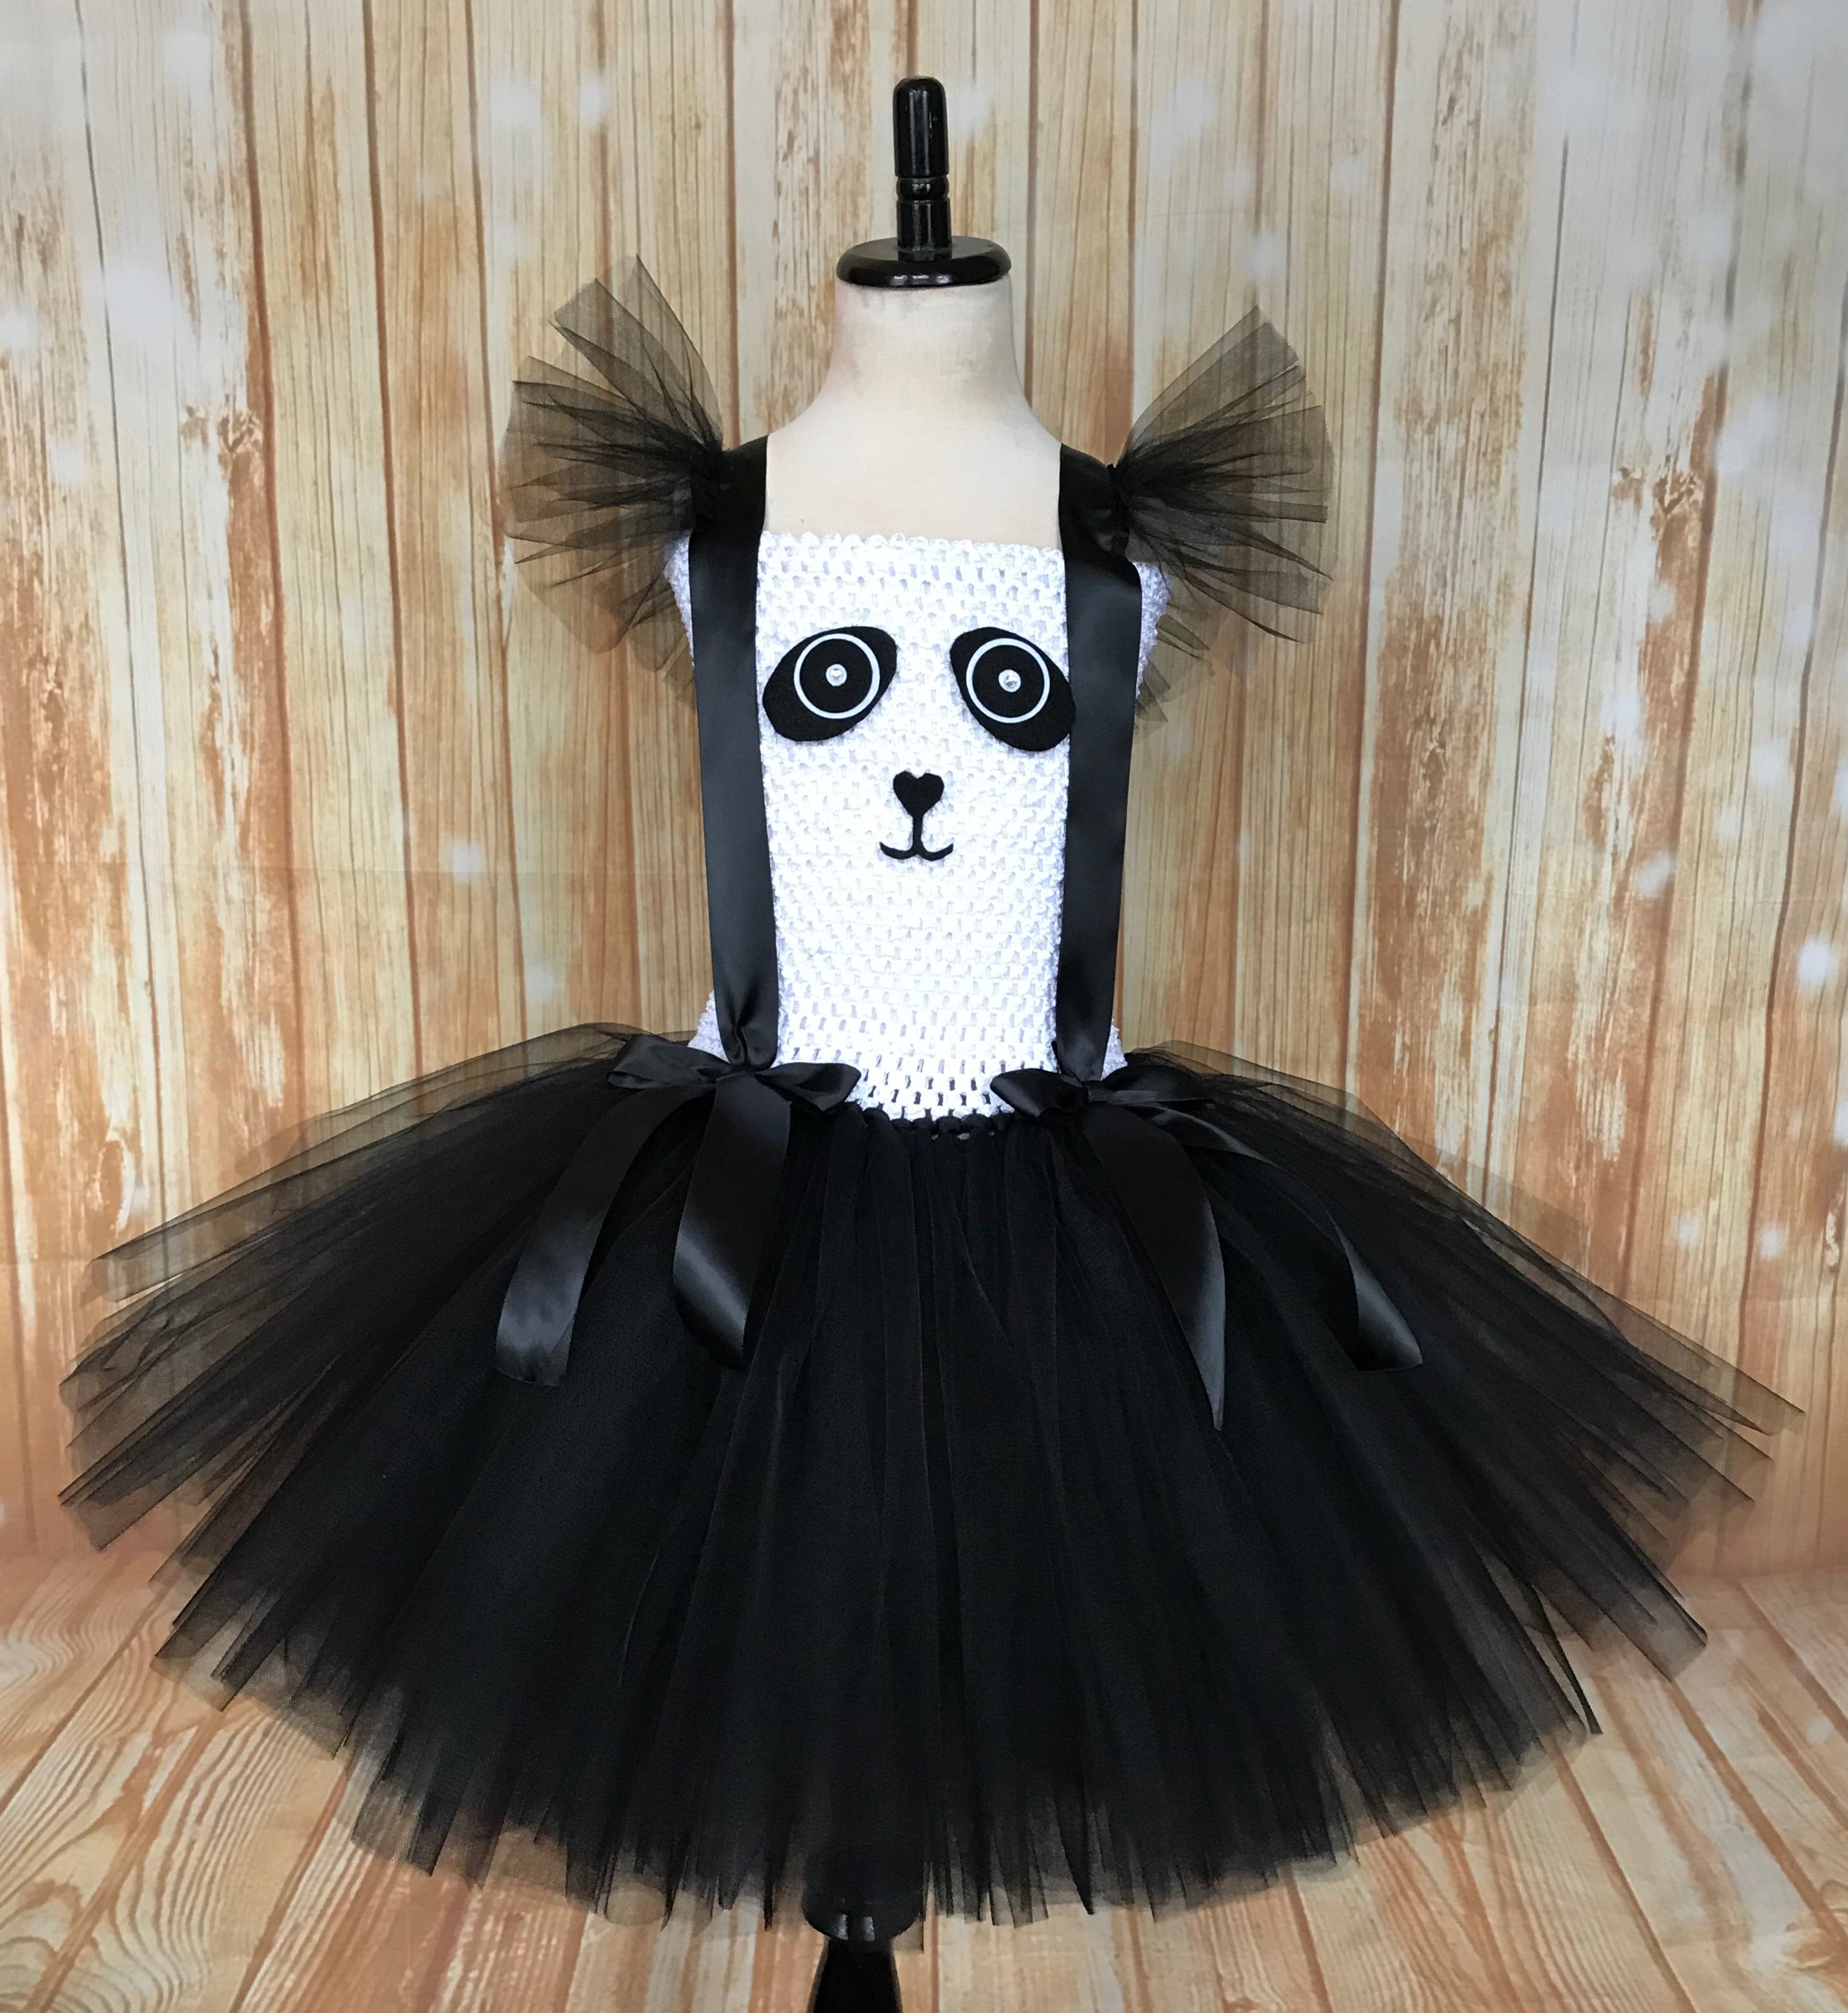 Disguise Toddler Girls Light Up Panda Bear Costume Dress & Headband Set |  eBay